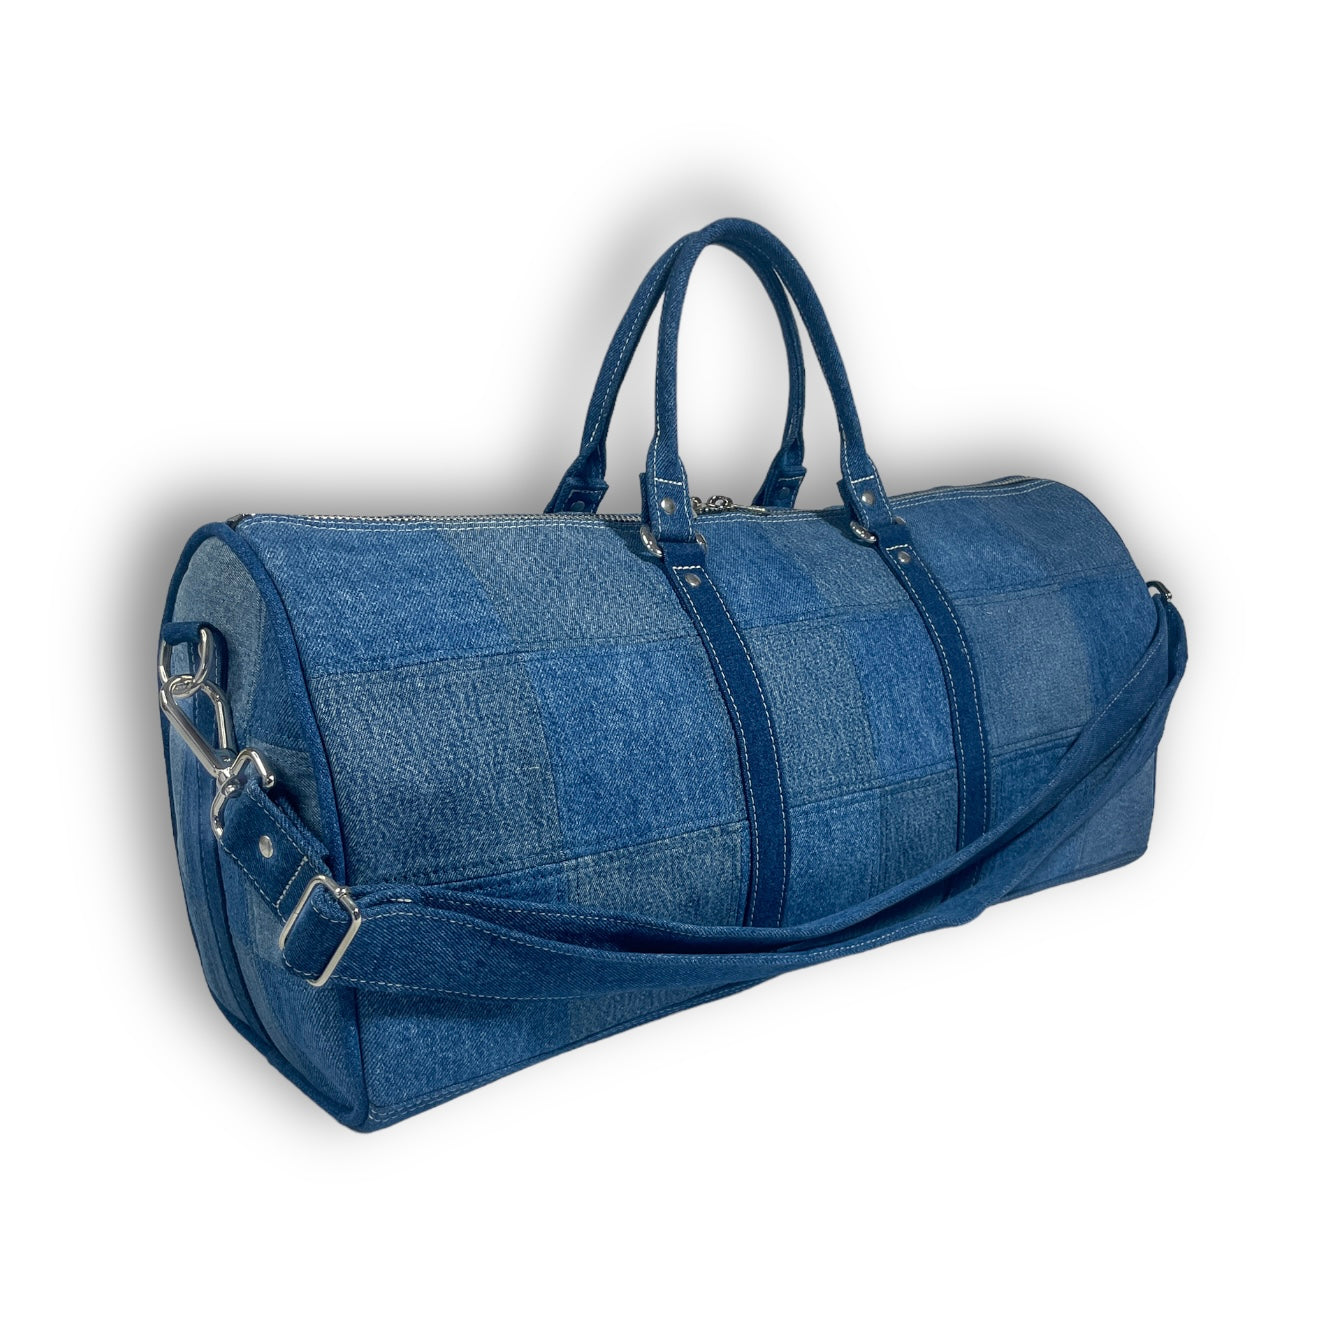 Duffle Bag Pattern